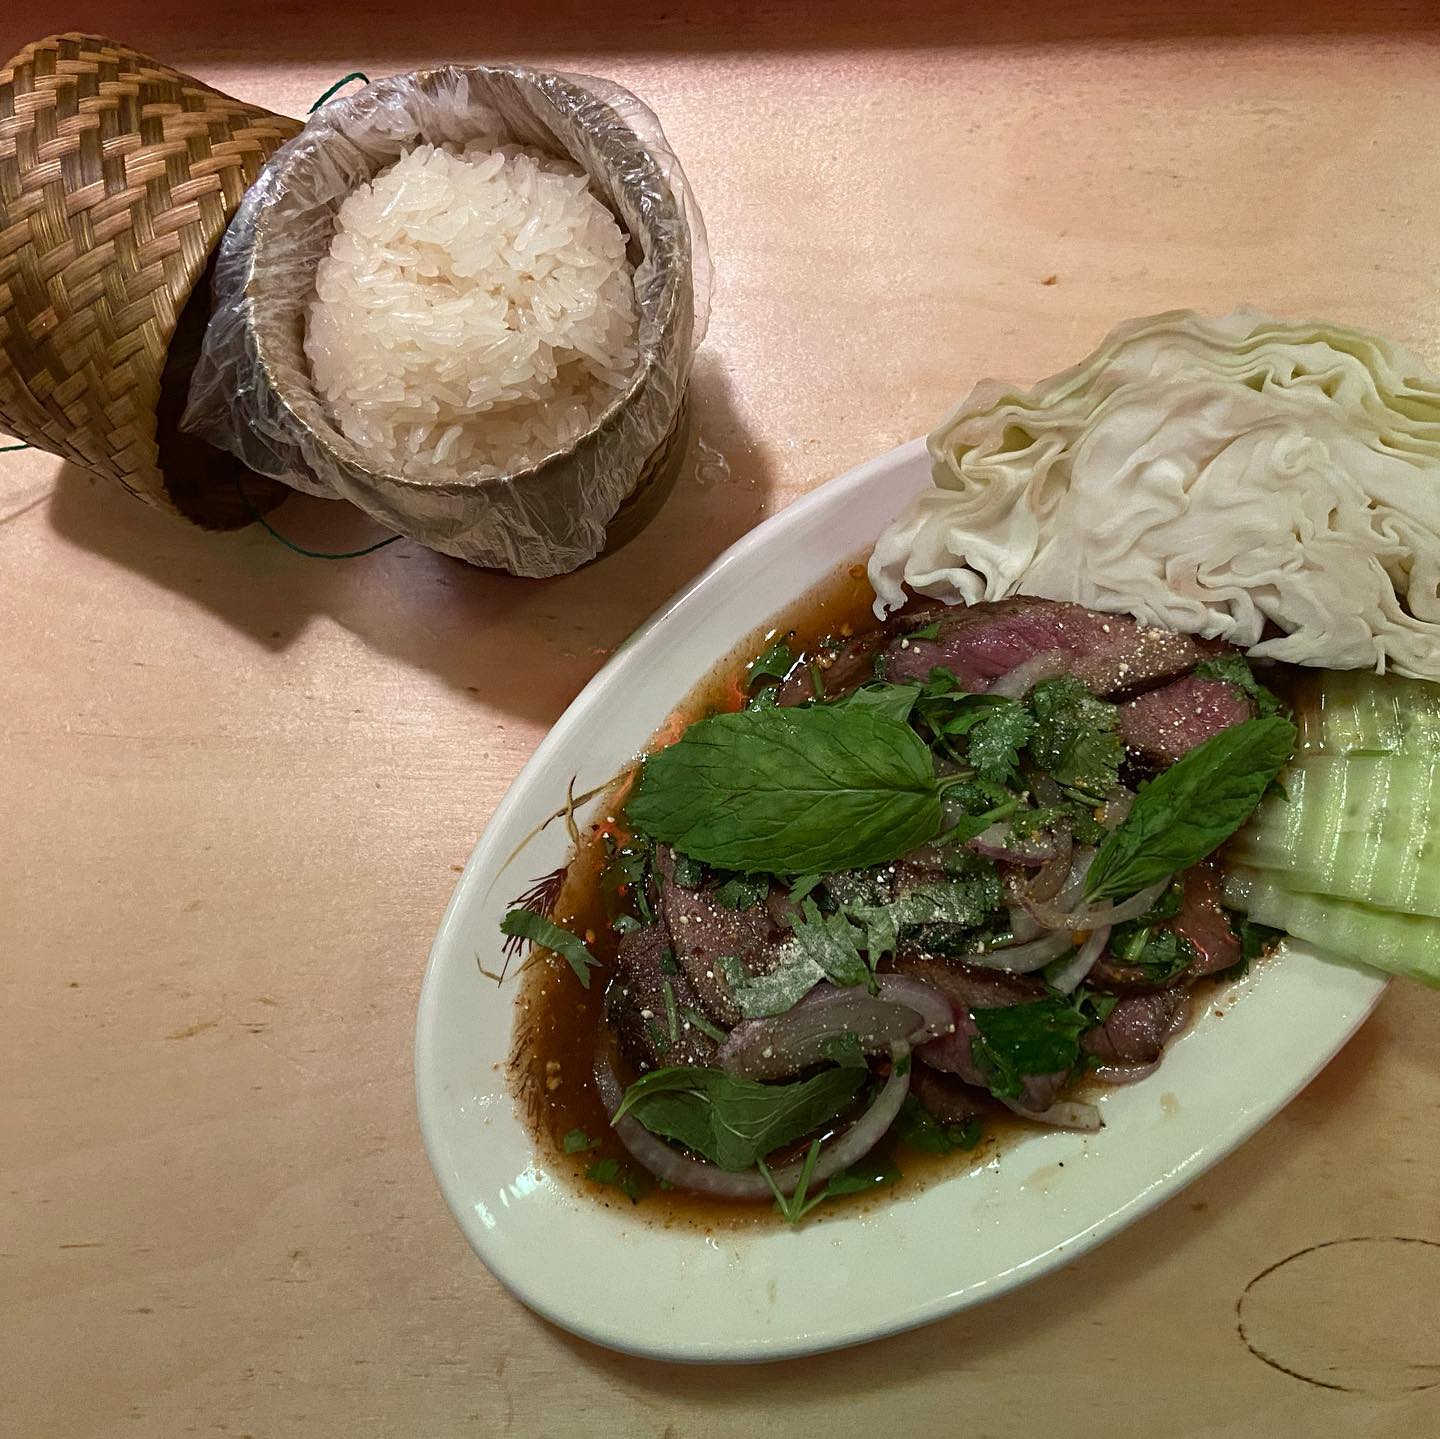 «Tuk Tuk Thai»: Ένα αυθεντικό έθνικ εστιατόριο που θα σε ταξιδέψει στην Ταϋλάνδη